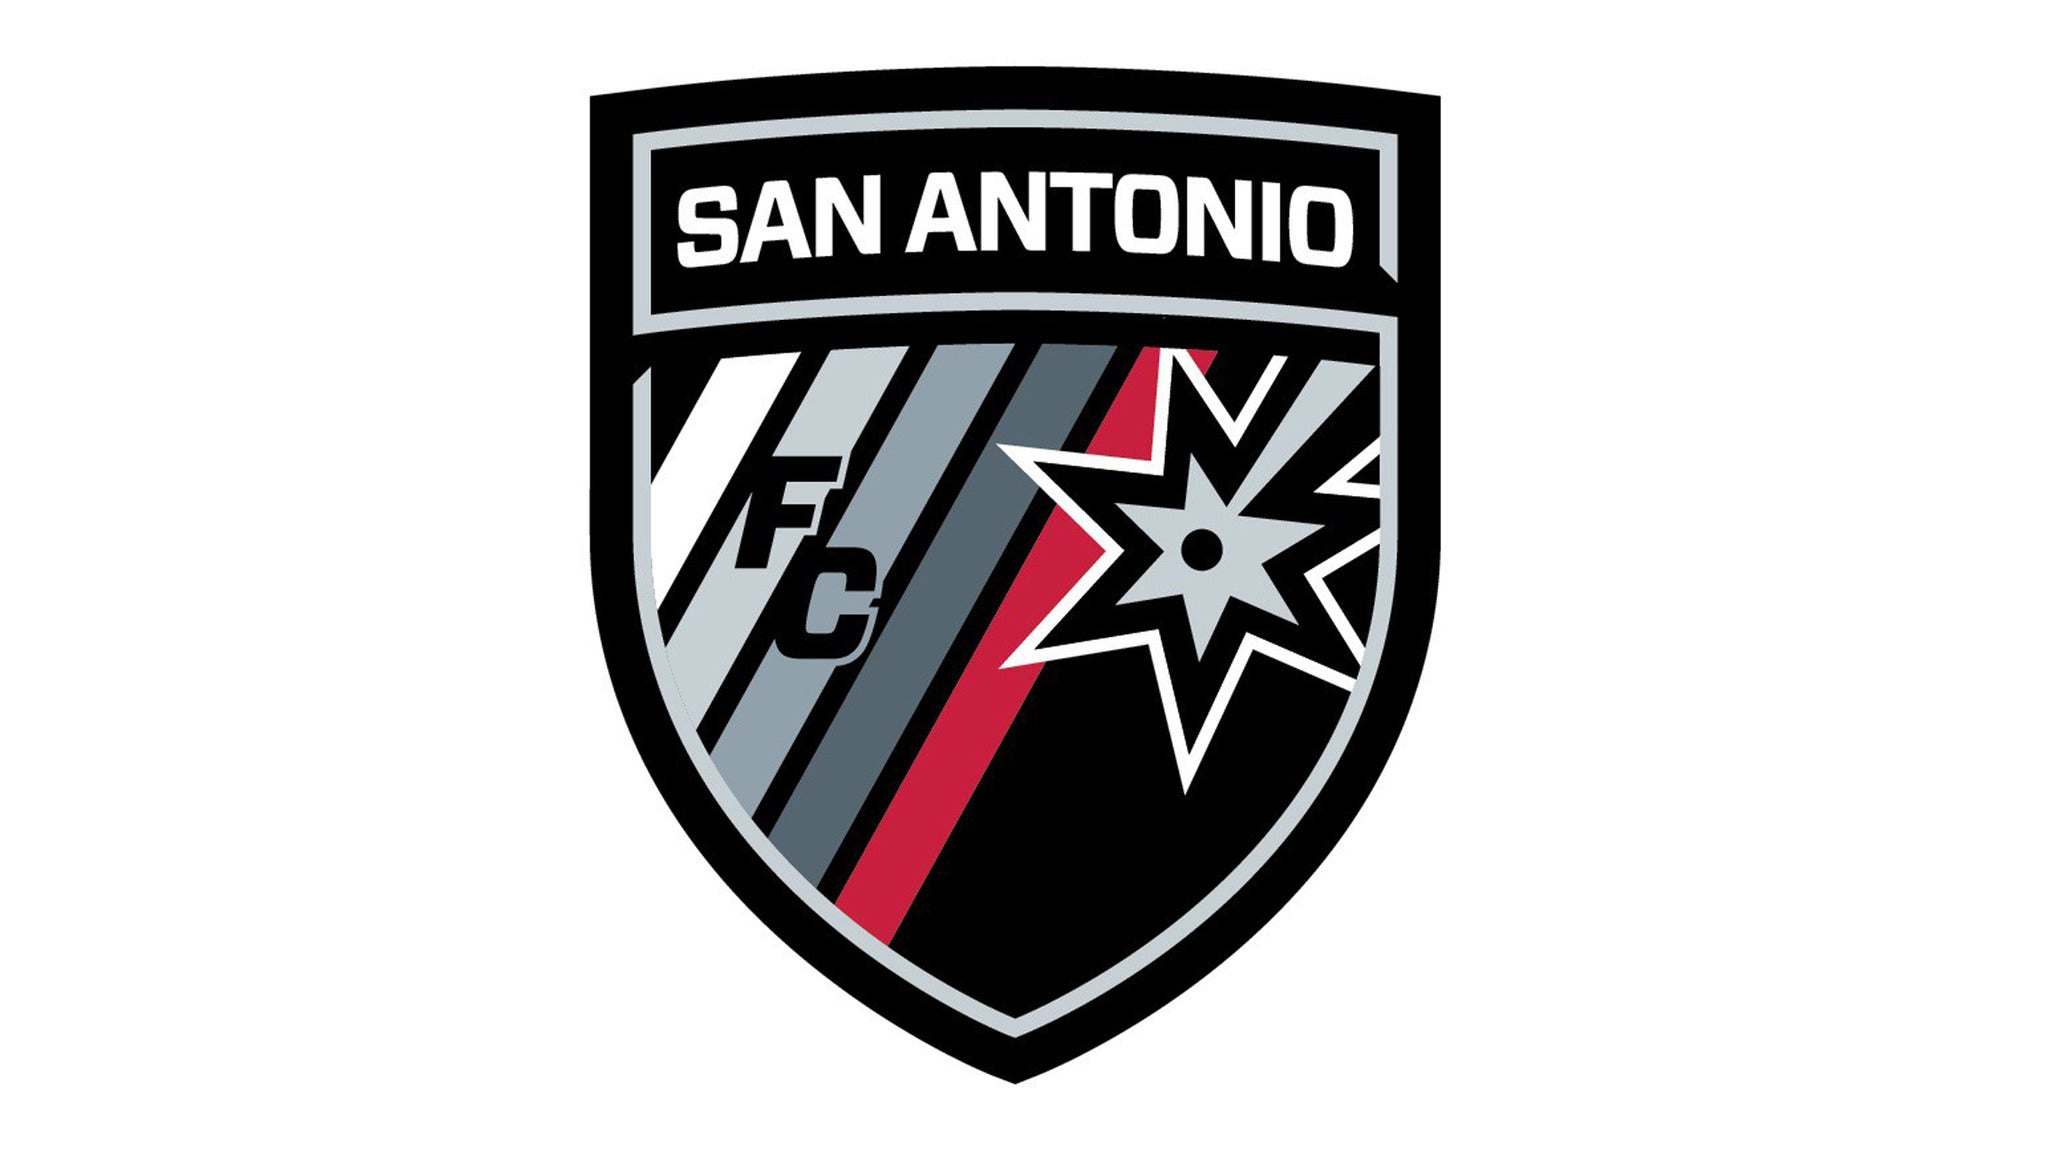 San Antonio FC vs. Rio Grande Valley FC in San Antonio promo photo for App presale offer code